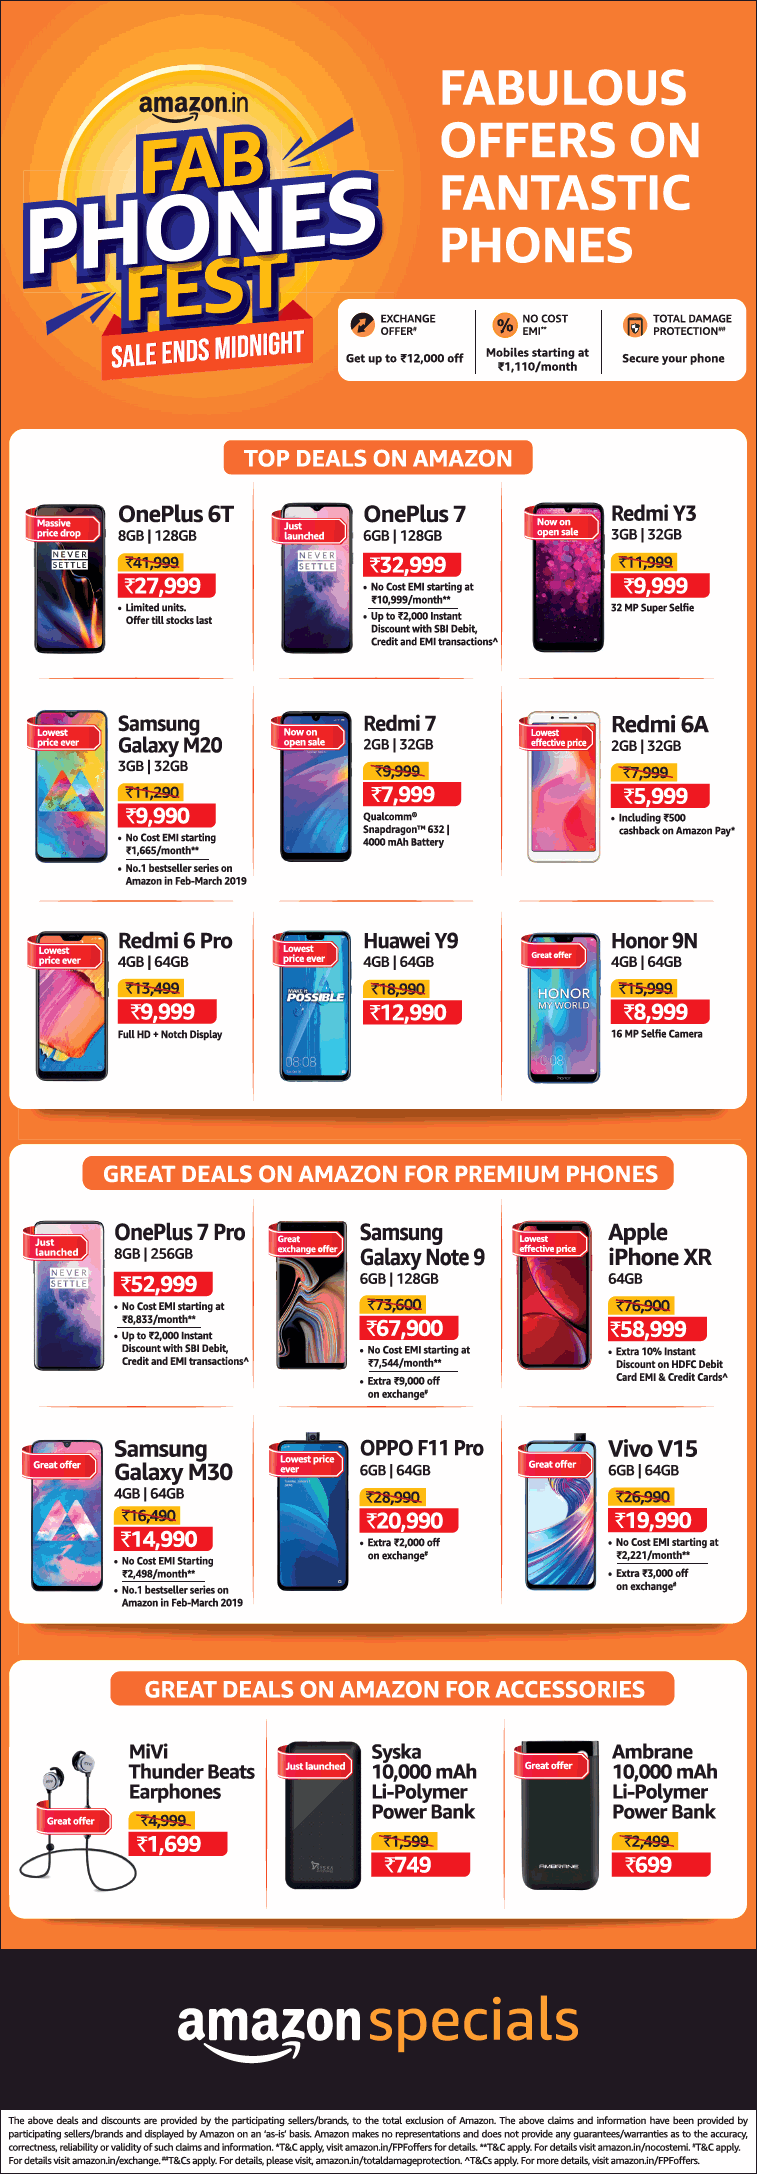 amazon-specials-fab-phones-fest-fabulous-offers-on-fantastic-phones-ad-times-of-india-delhi-13-06-2019.png